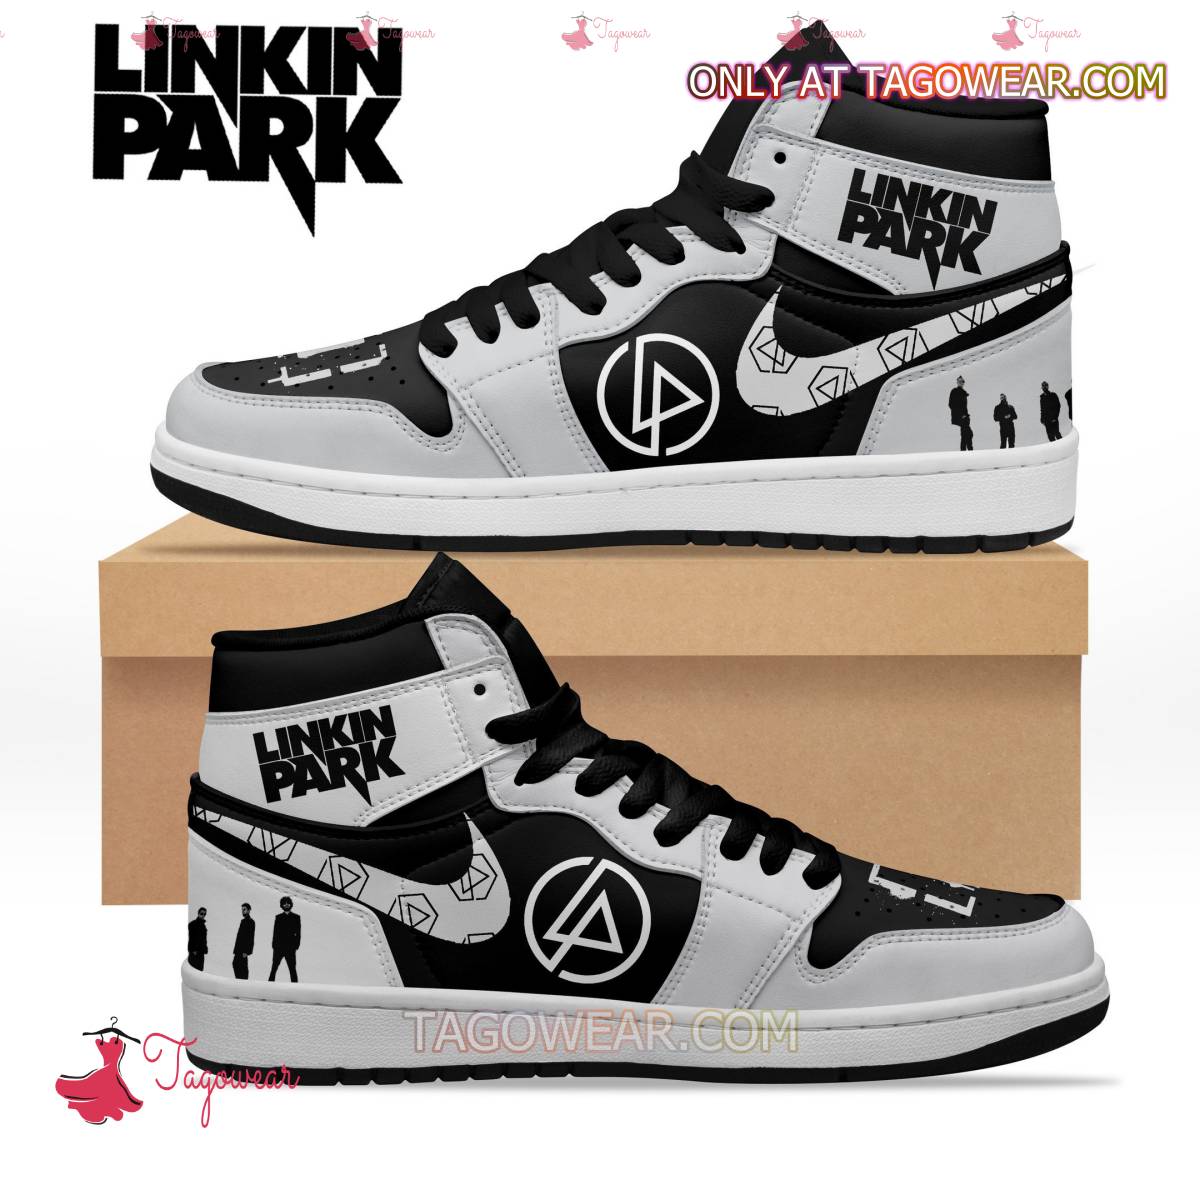 Linkin Park Air Jordan High Top Shoes